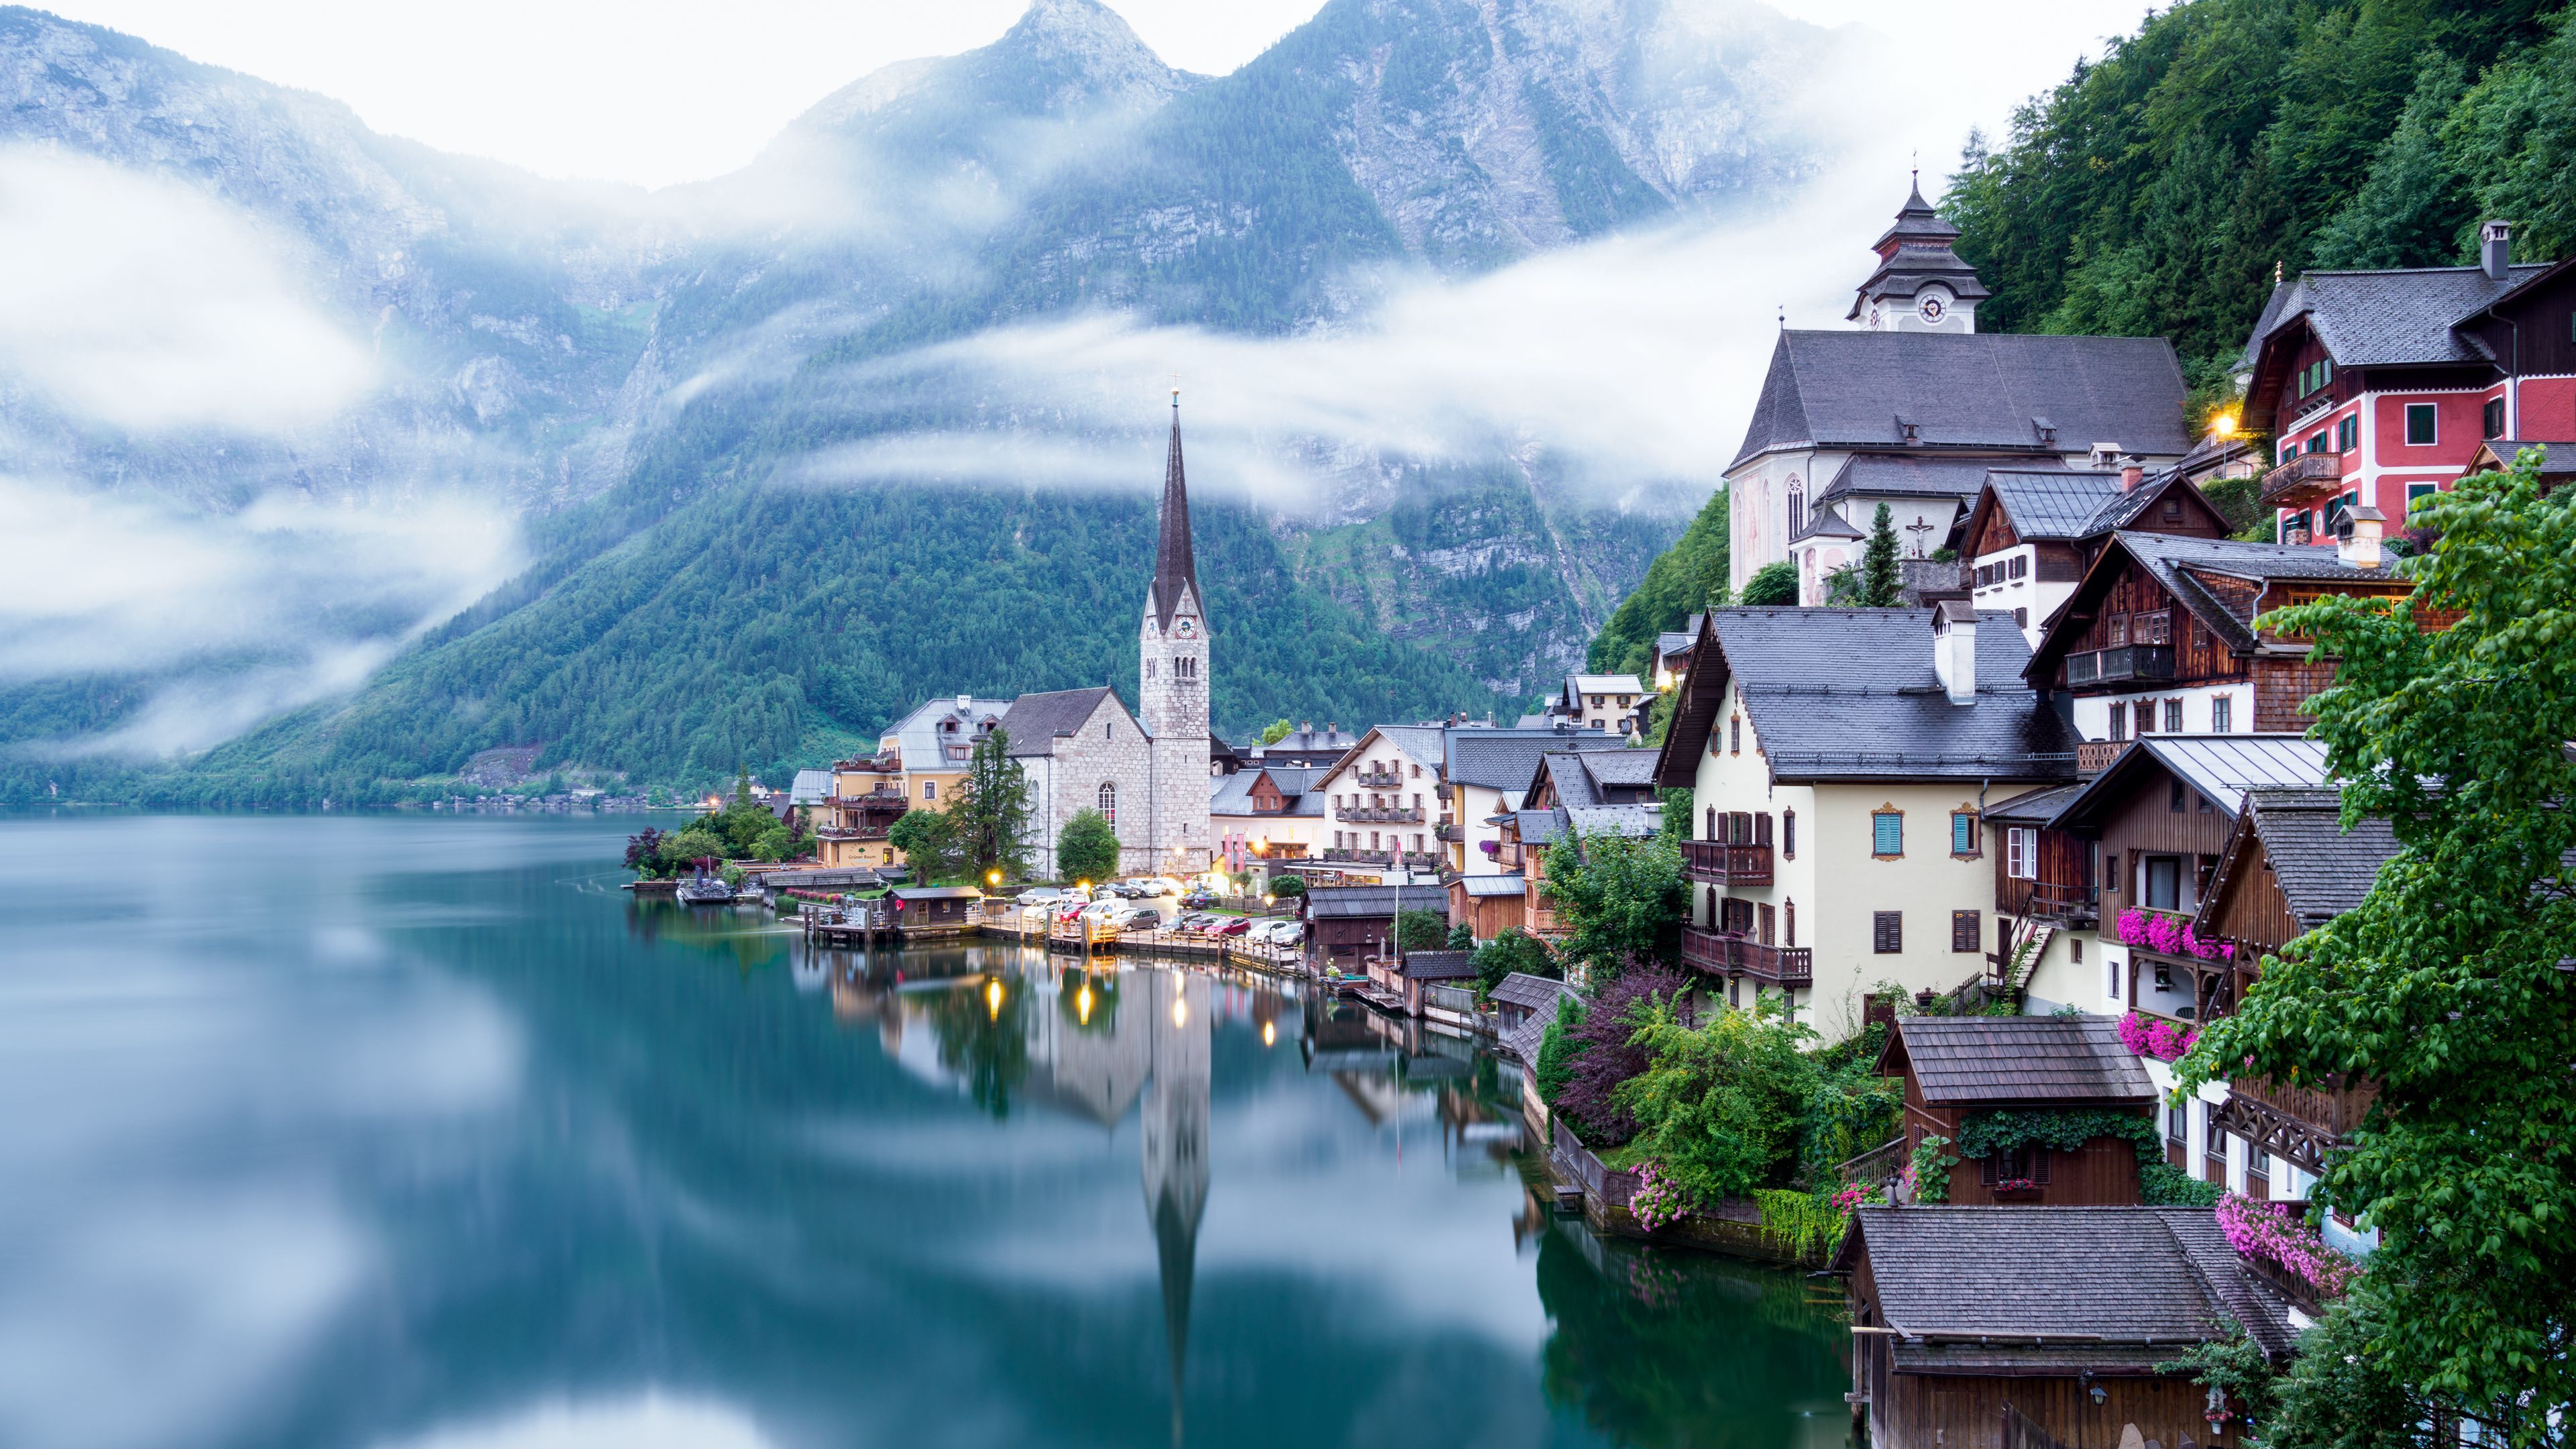 Download wallpaper 3840x2160 lake, mountains, village, hallstatt, austria 4k uhd 16:9 HD background